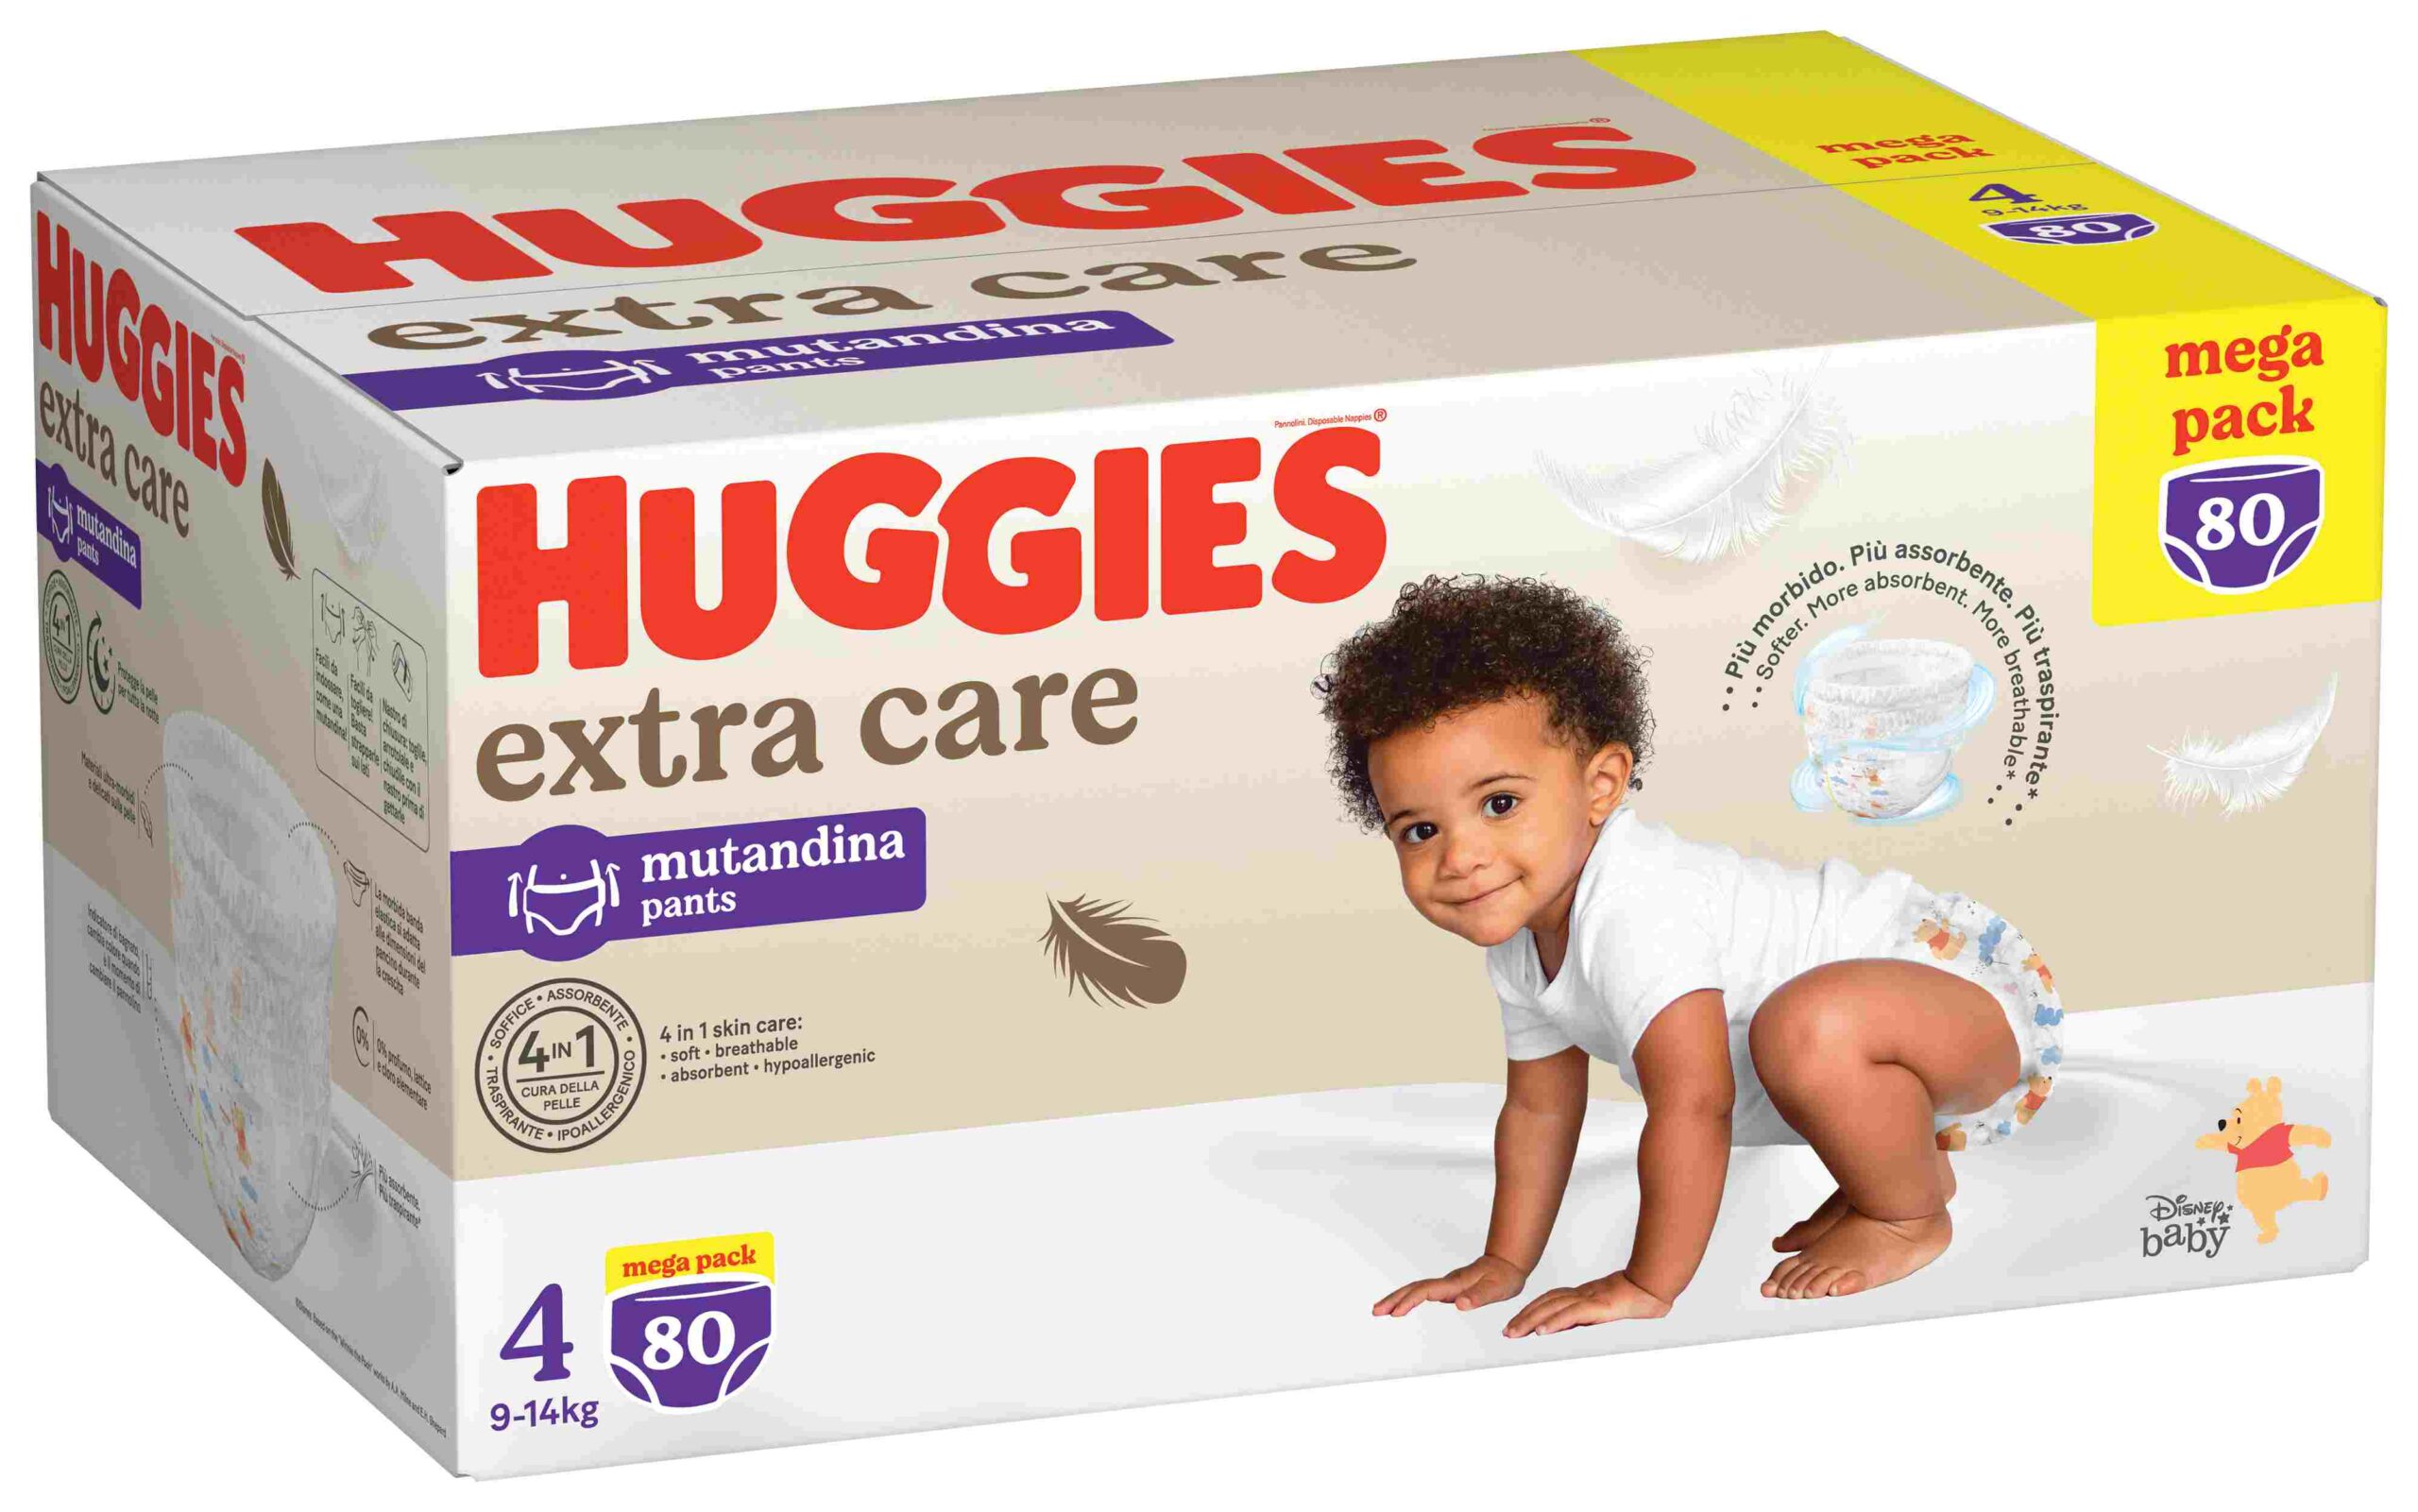 Huggies extra care mutandina unisex mega pack tg.4 80 pezzi - Huggies